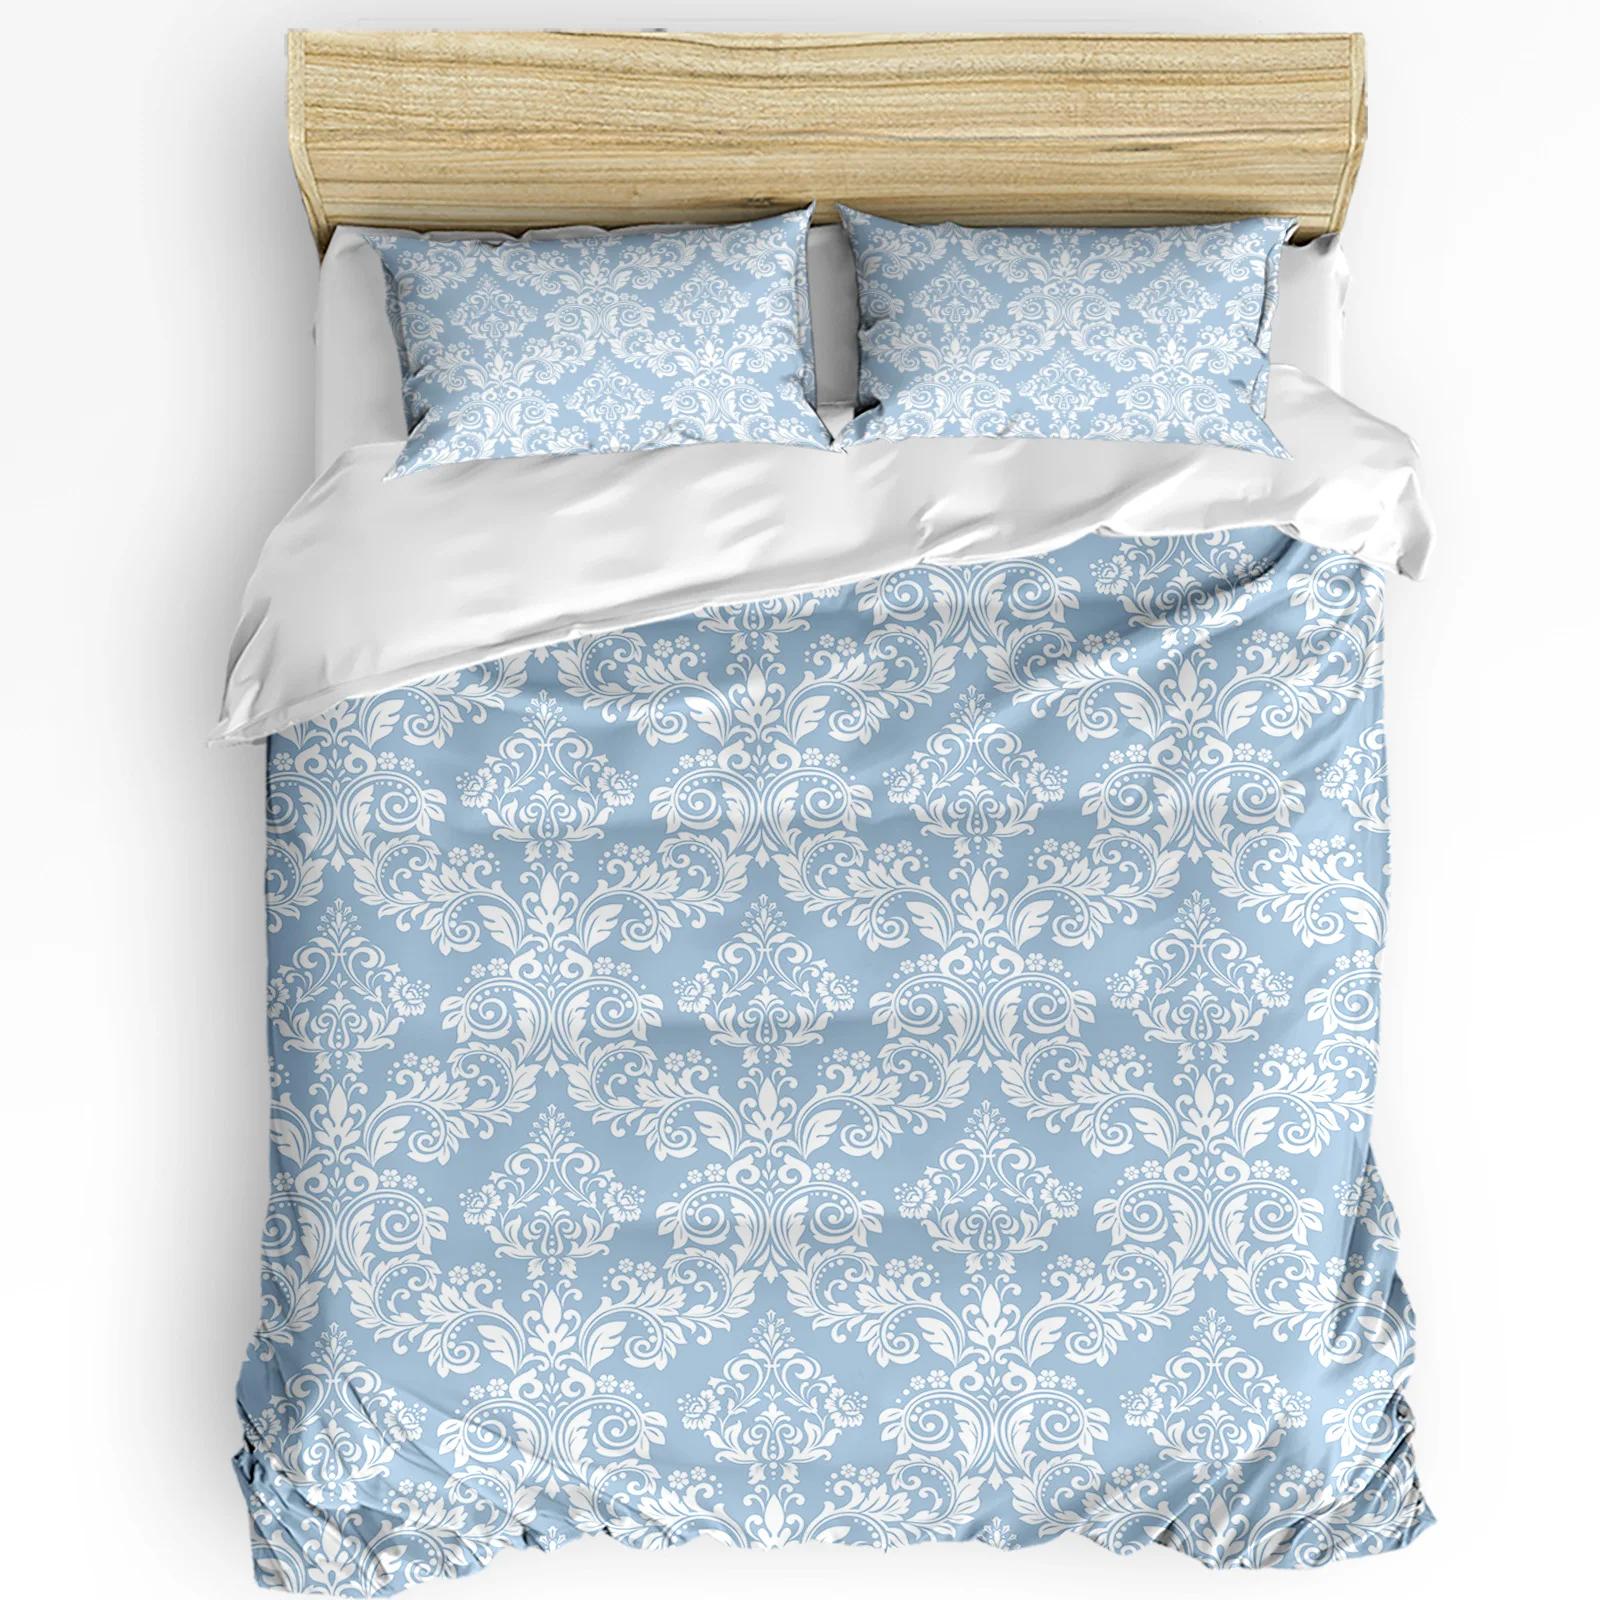 Light Blue Baroque Flower Bedding Set 3pcs Boys Girls Duvet Cover Pillowcase Kids Adult Quilt Cover Double Bed Set H